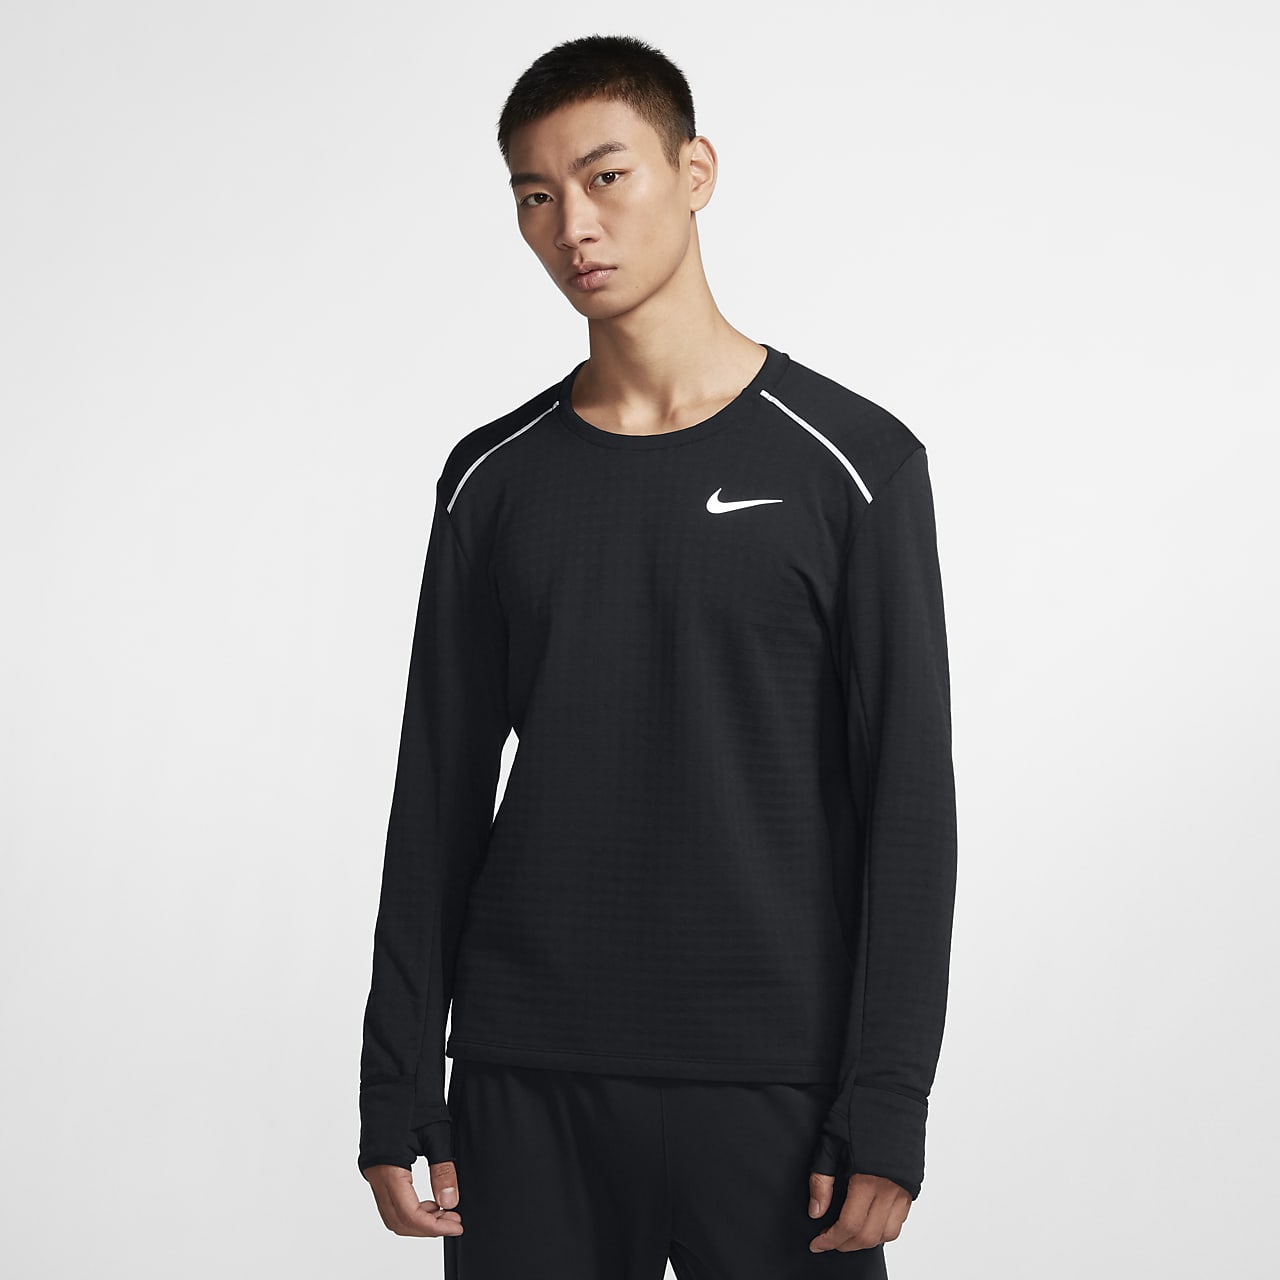 Nike Therma Element 3.0 男子长袖跑步上衣